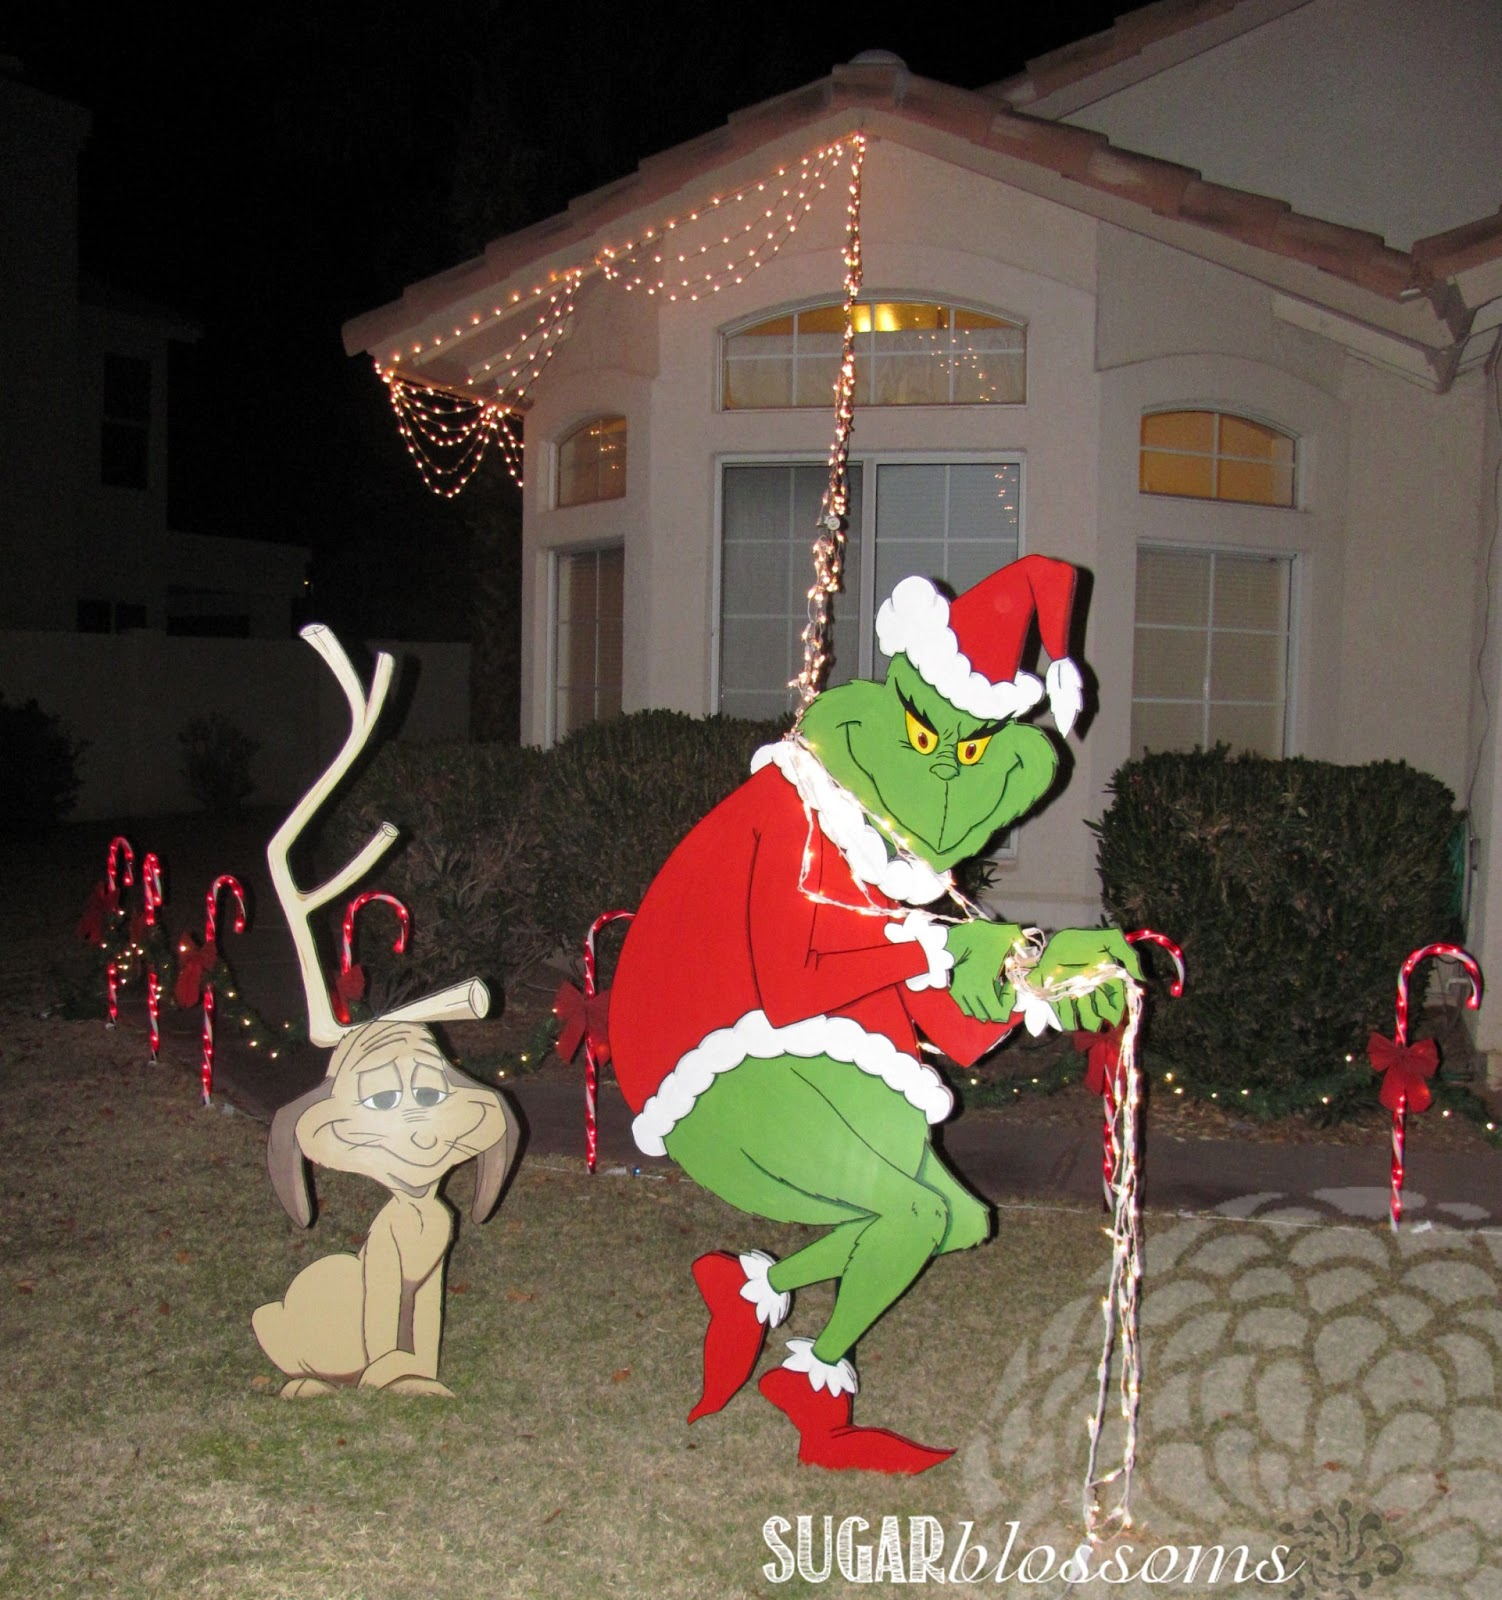 Christmas Decoration Grinch Stealing Lights Holliday Decorations regarding measurements 1502 X 1600